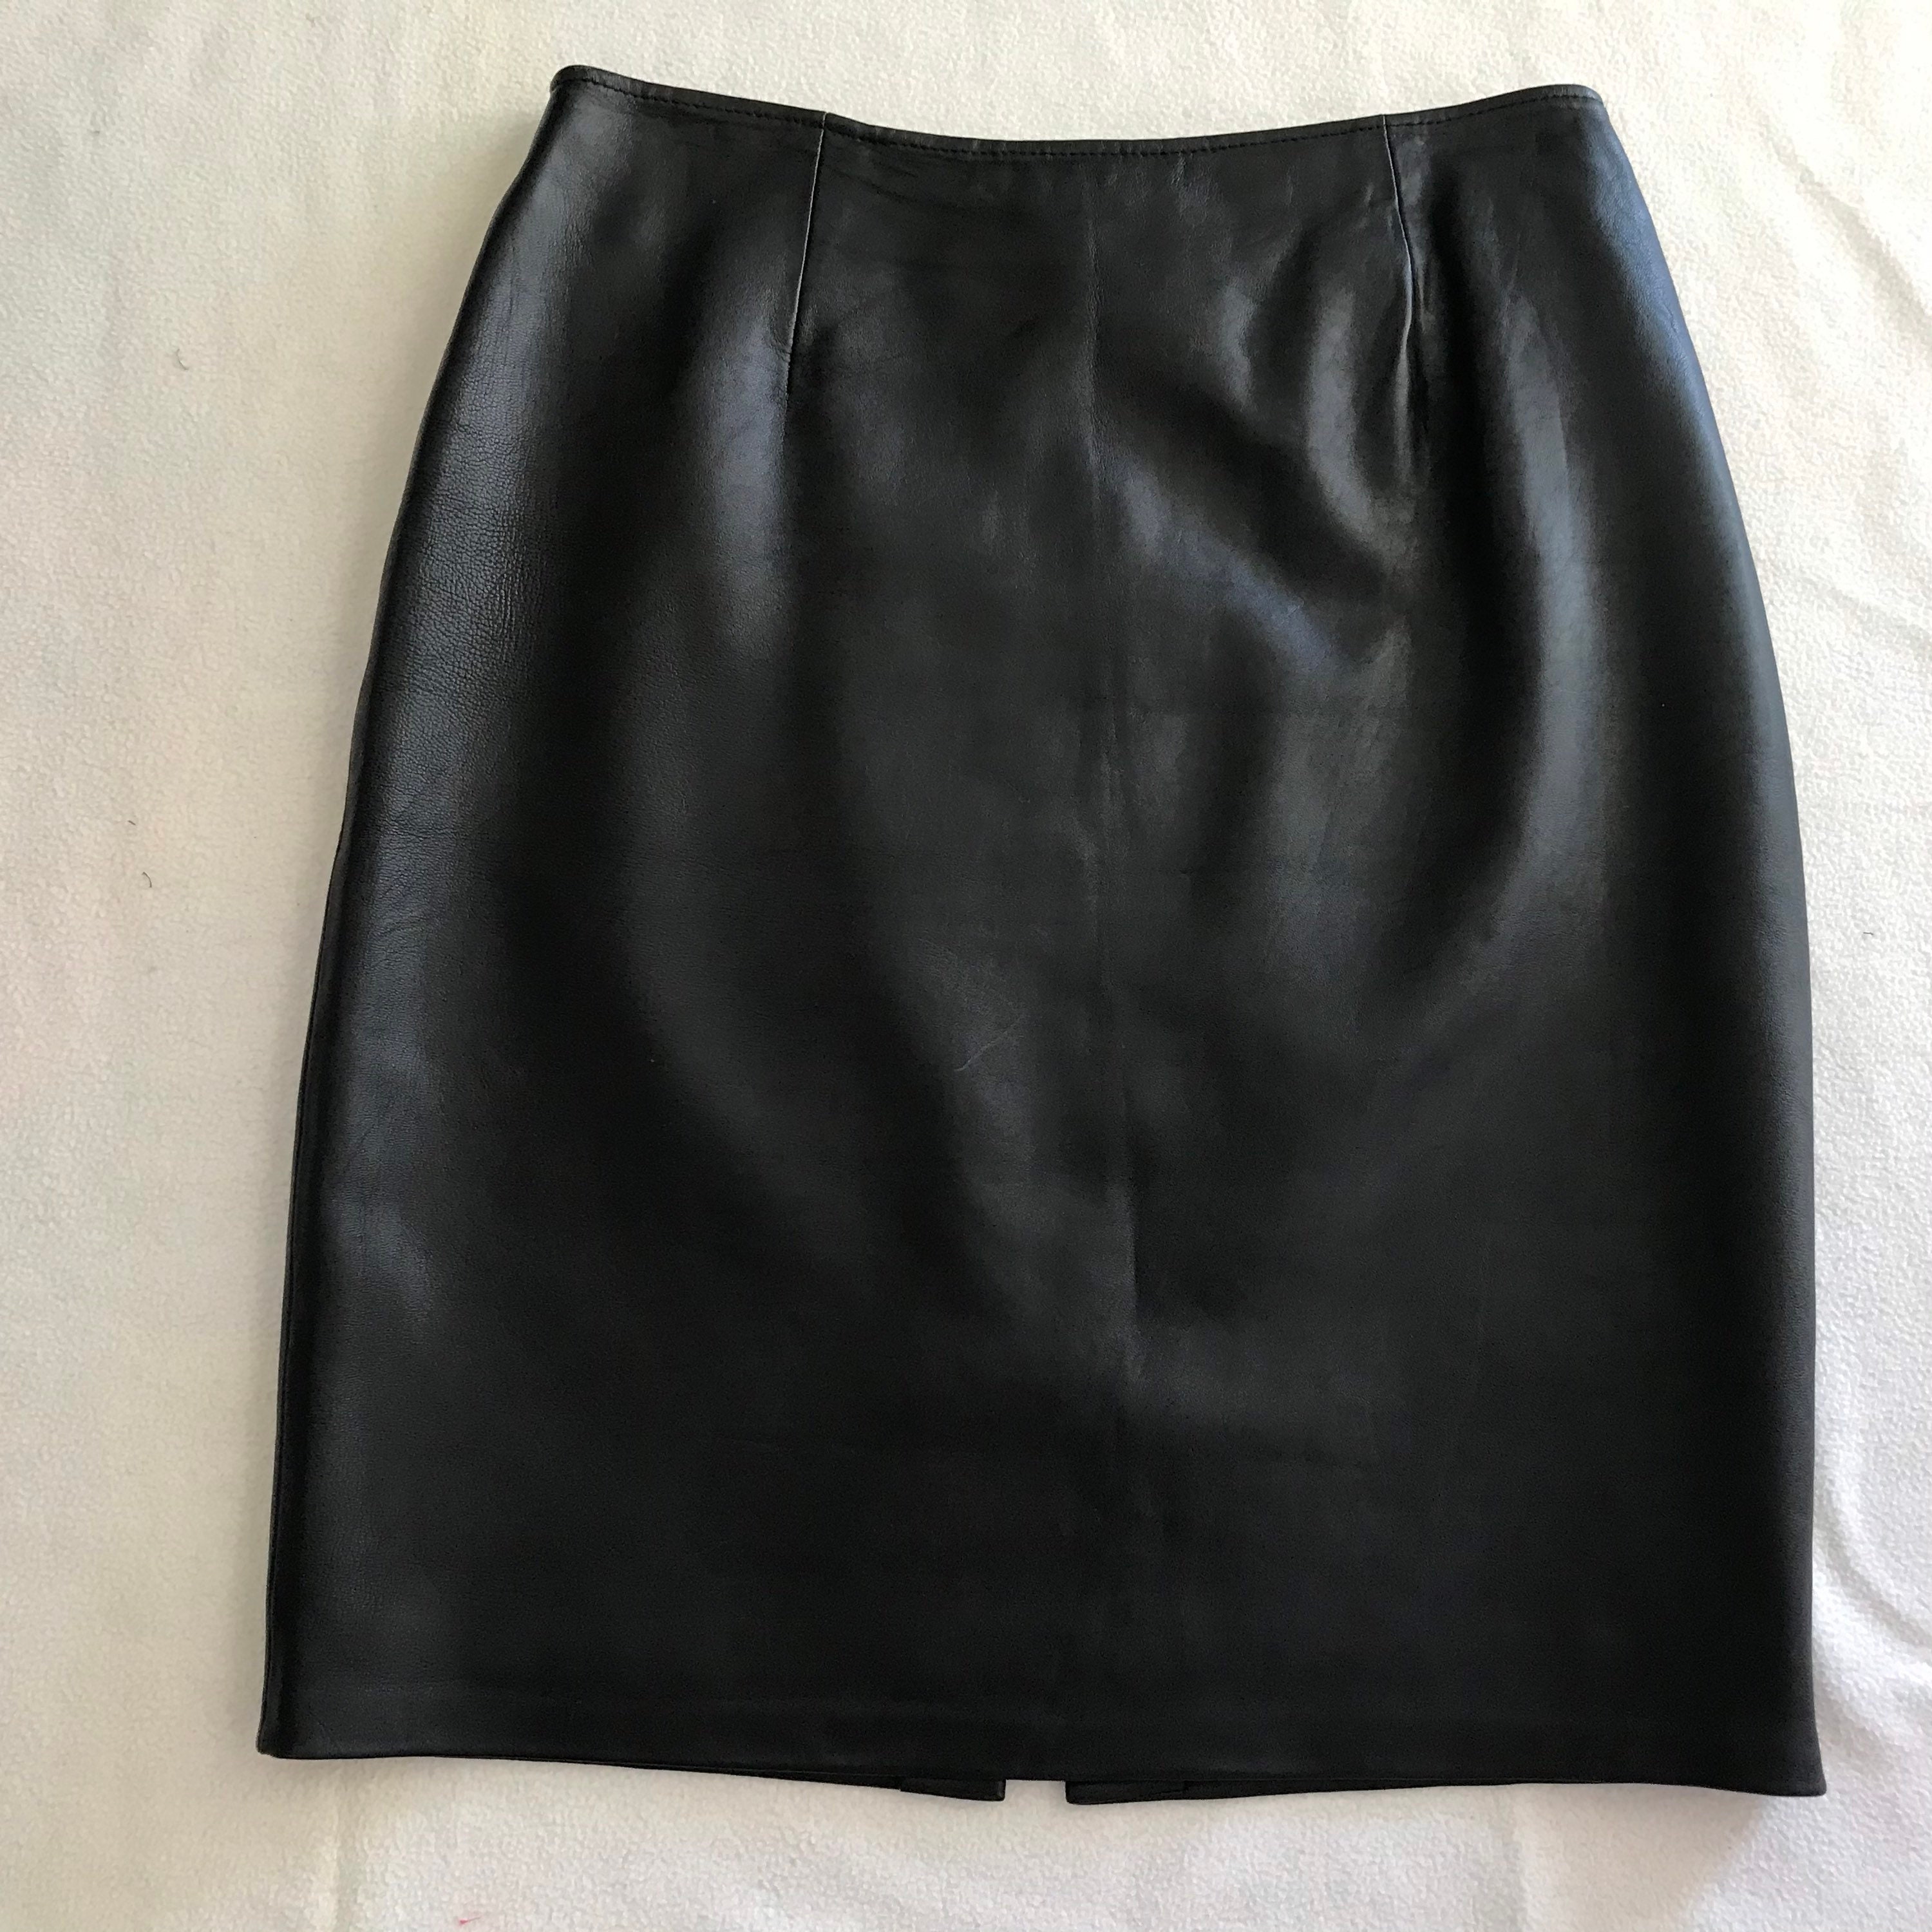 Leather skirt | Etsy